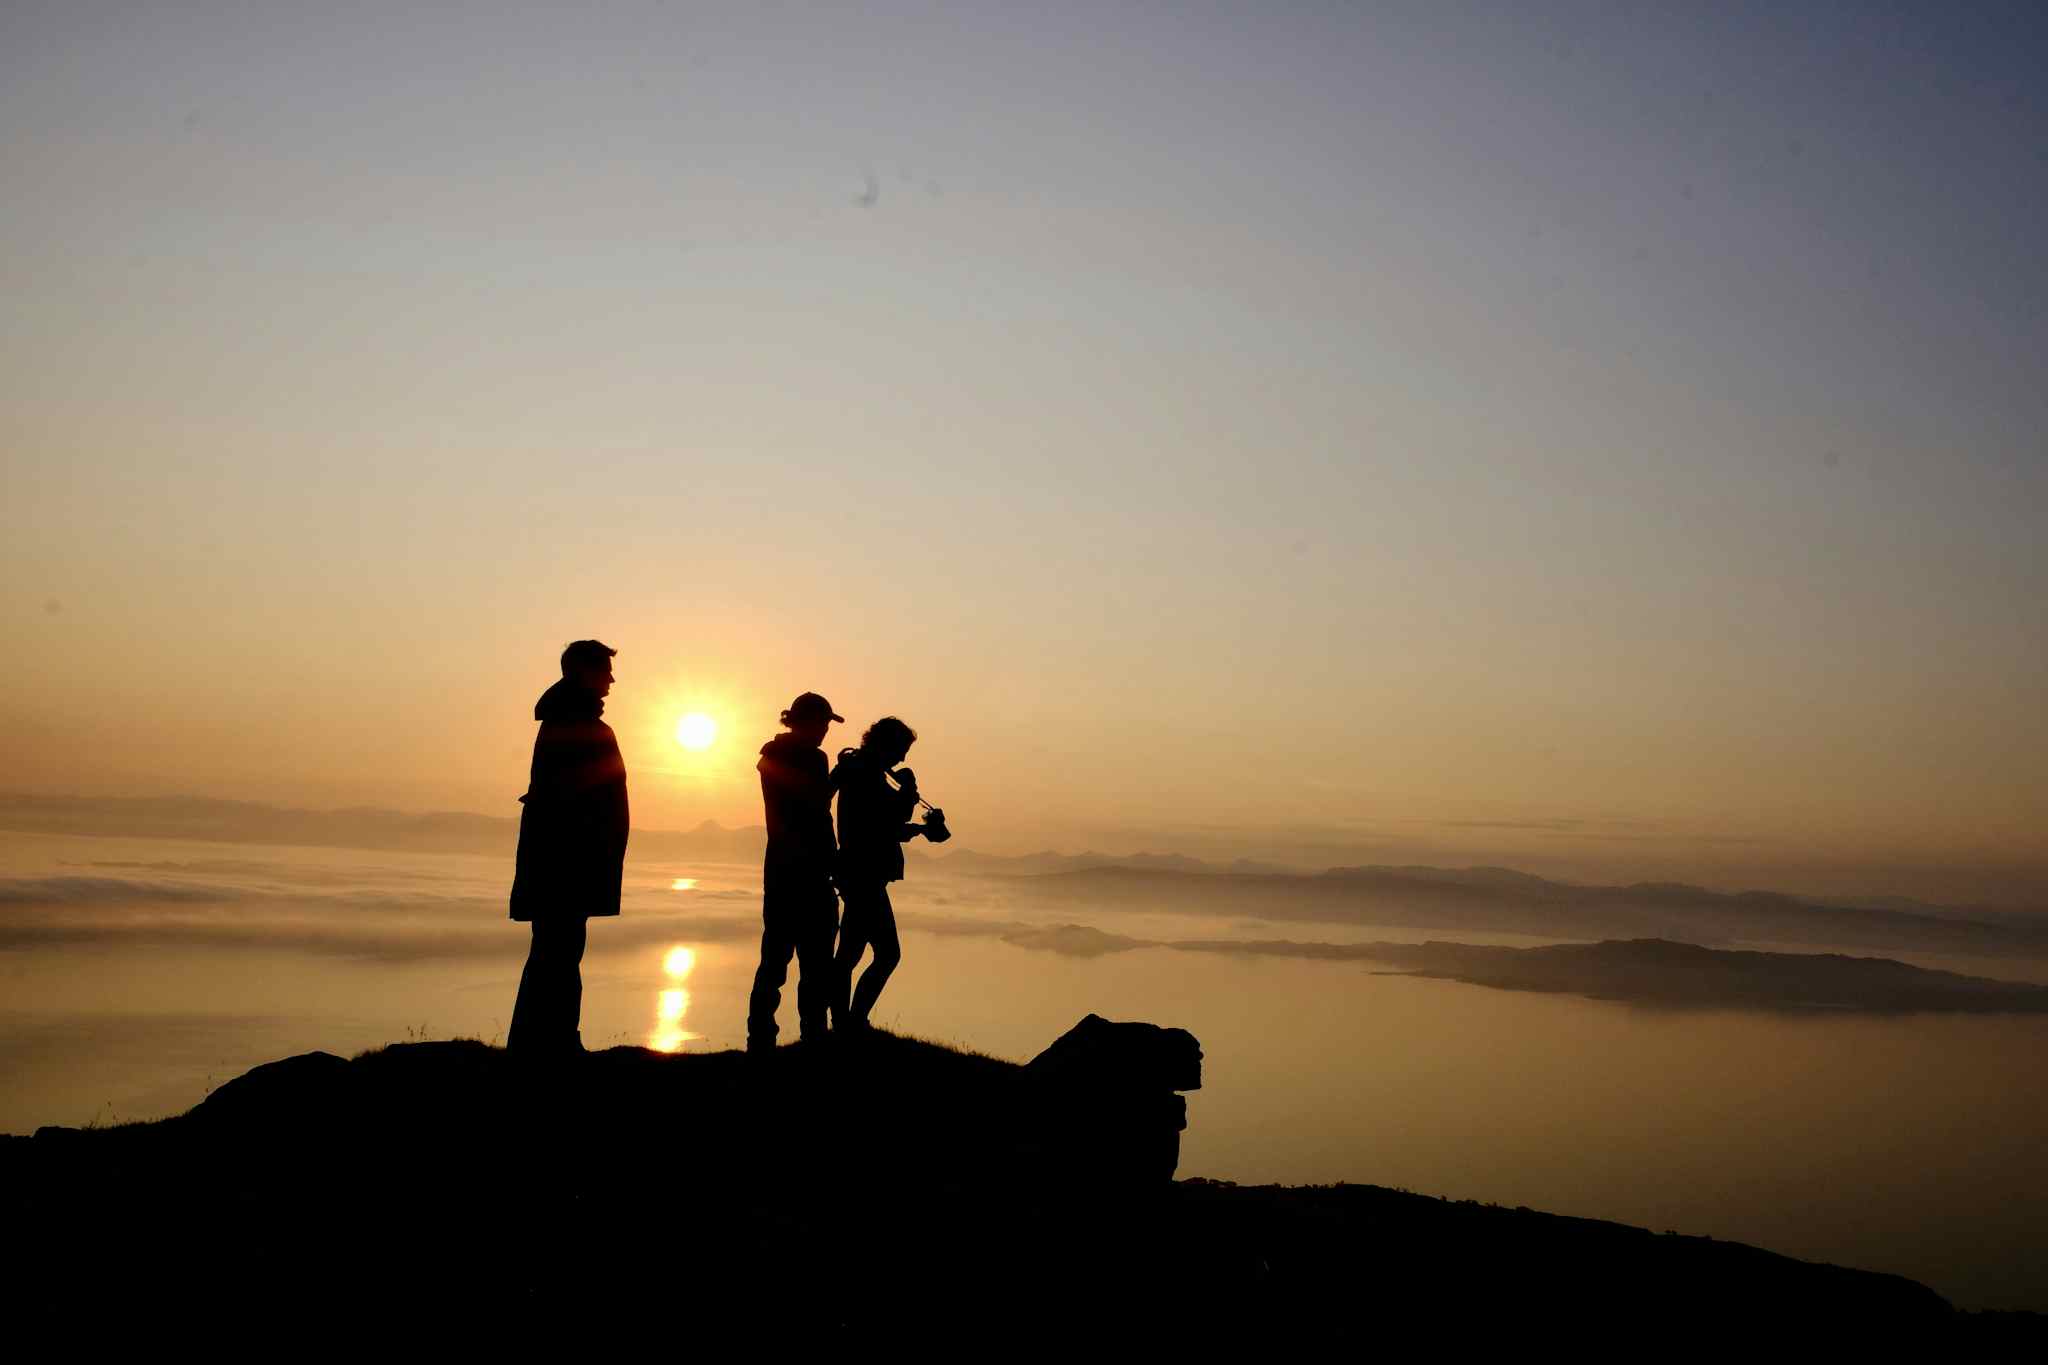 Isle of Skye Adventure Photography Workshop